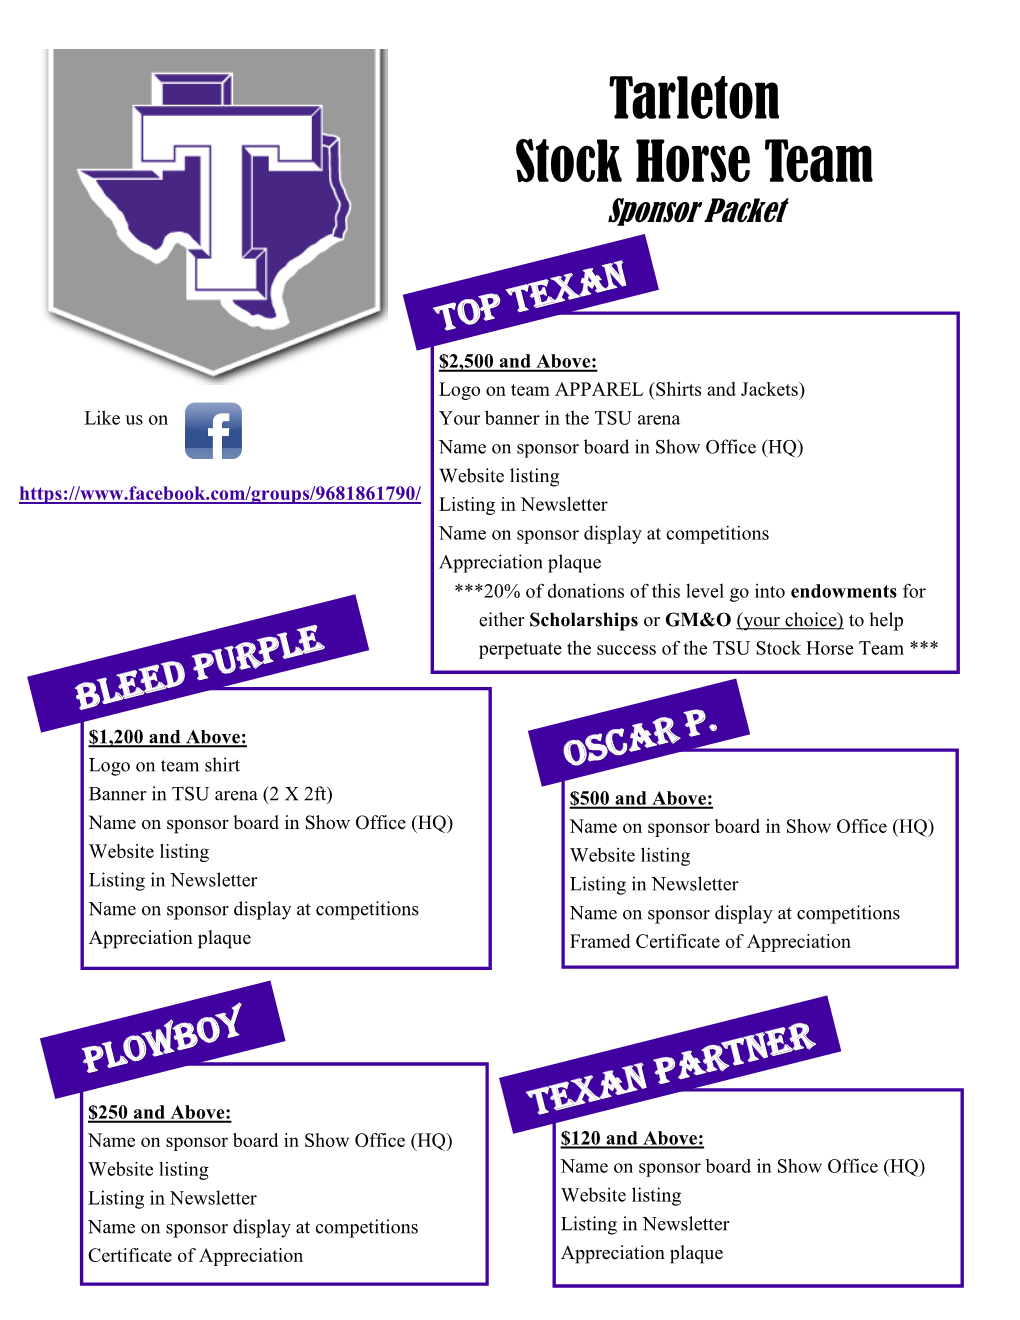 Tarleton Stock Horse Team